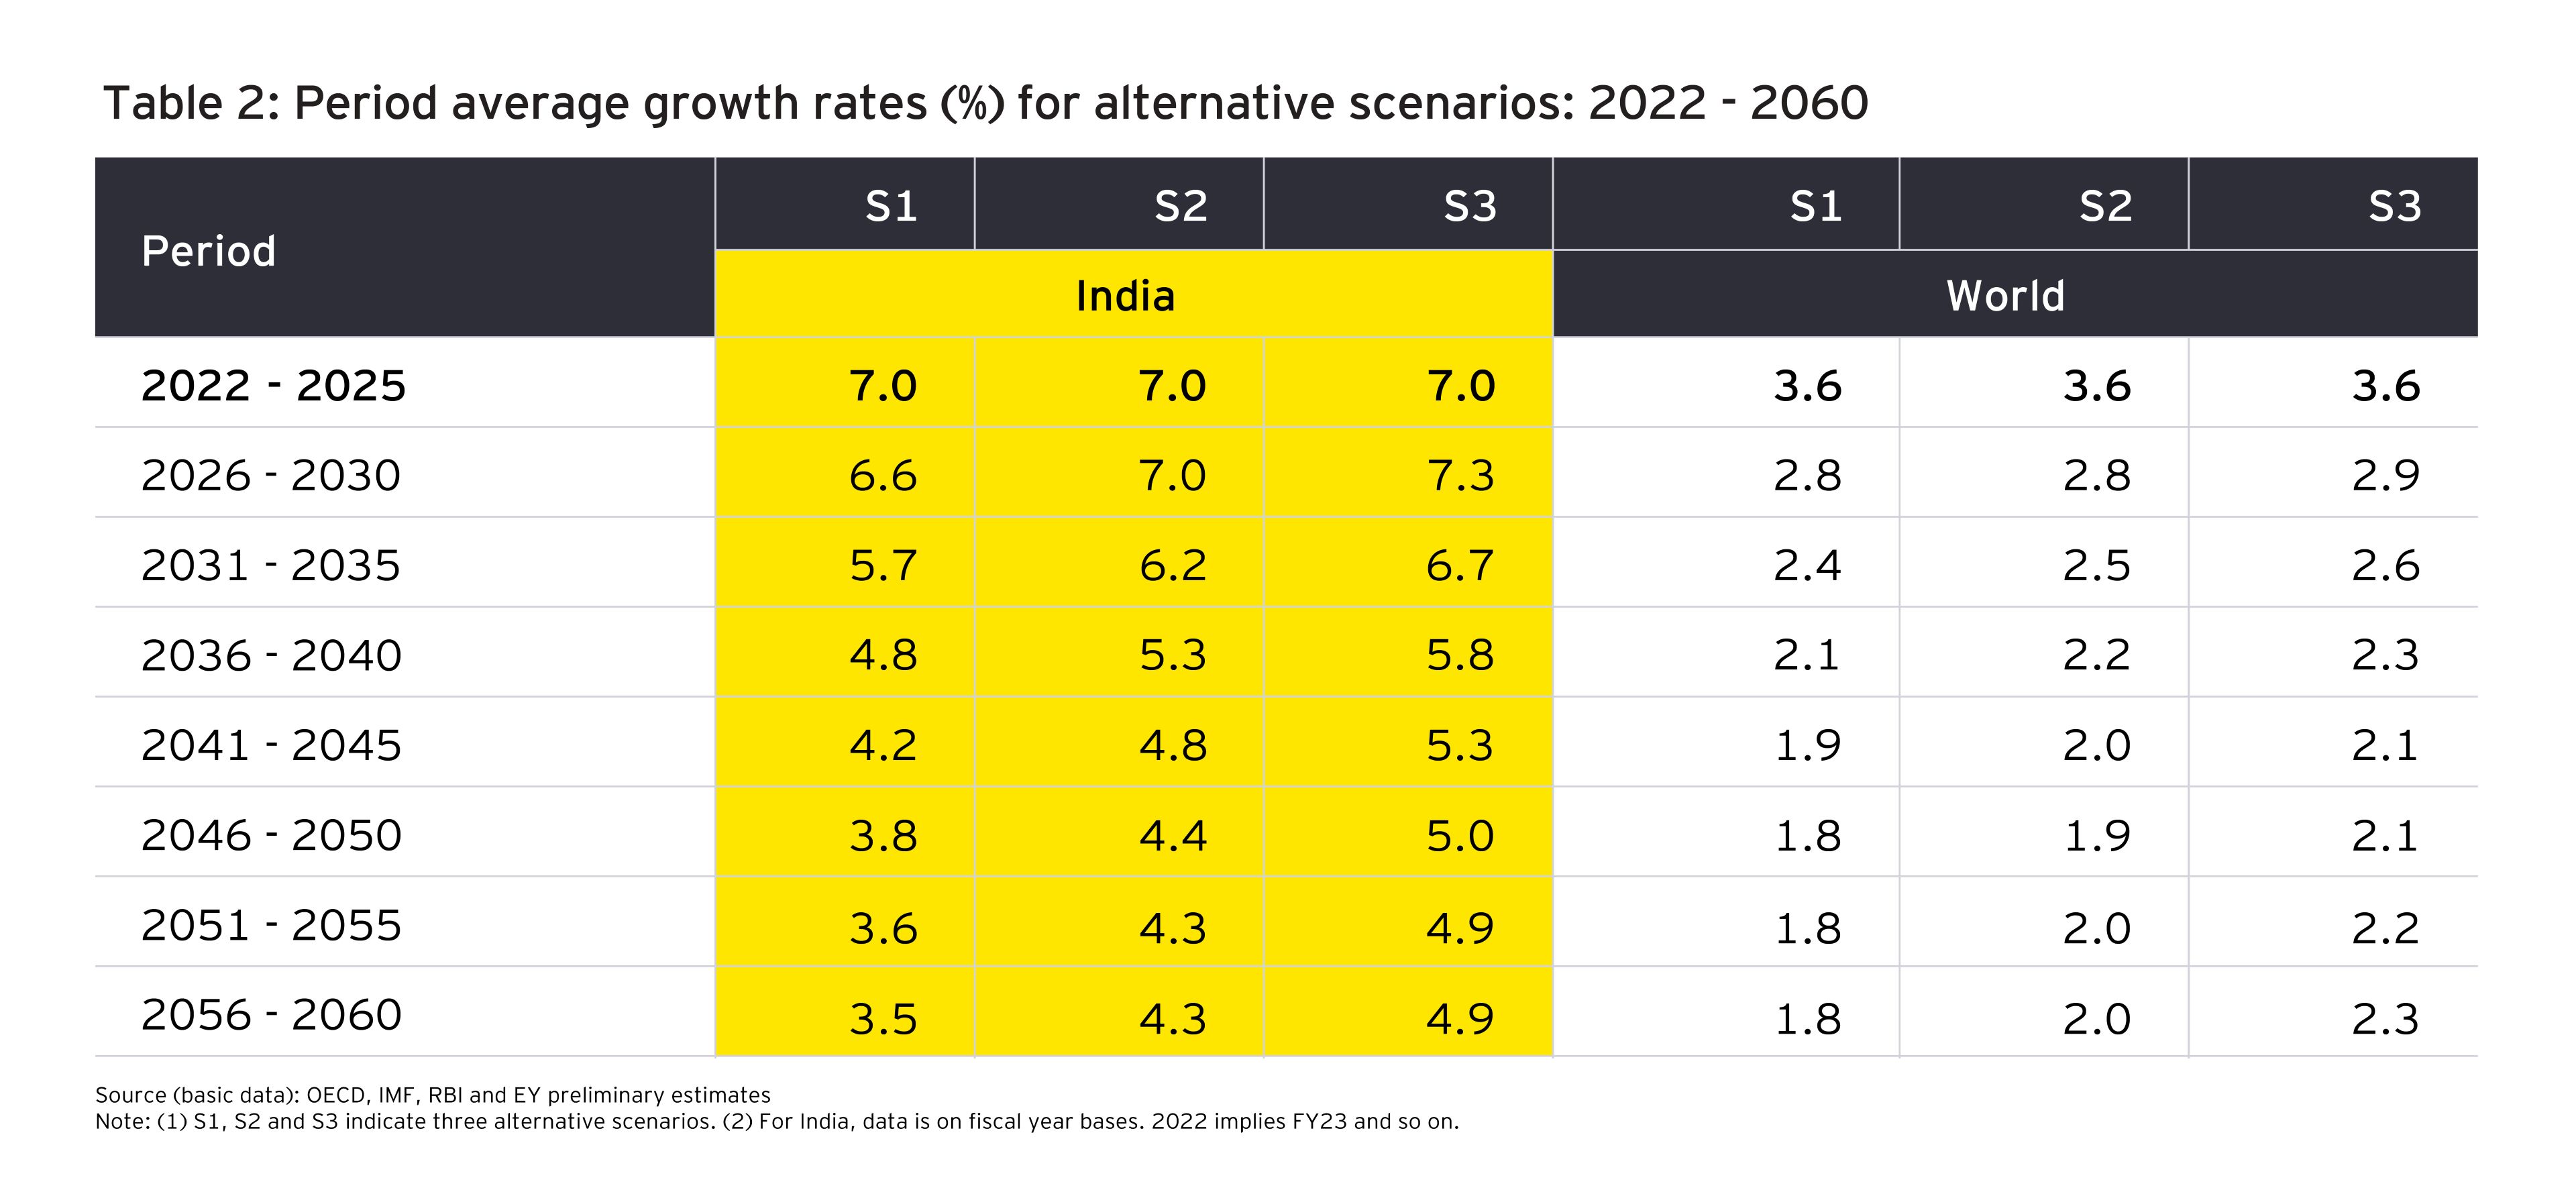 Period average growth rates (%) for alternative scenarios: 2022 to 2060